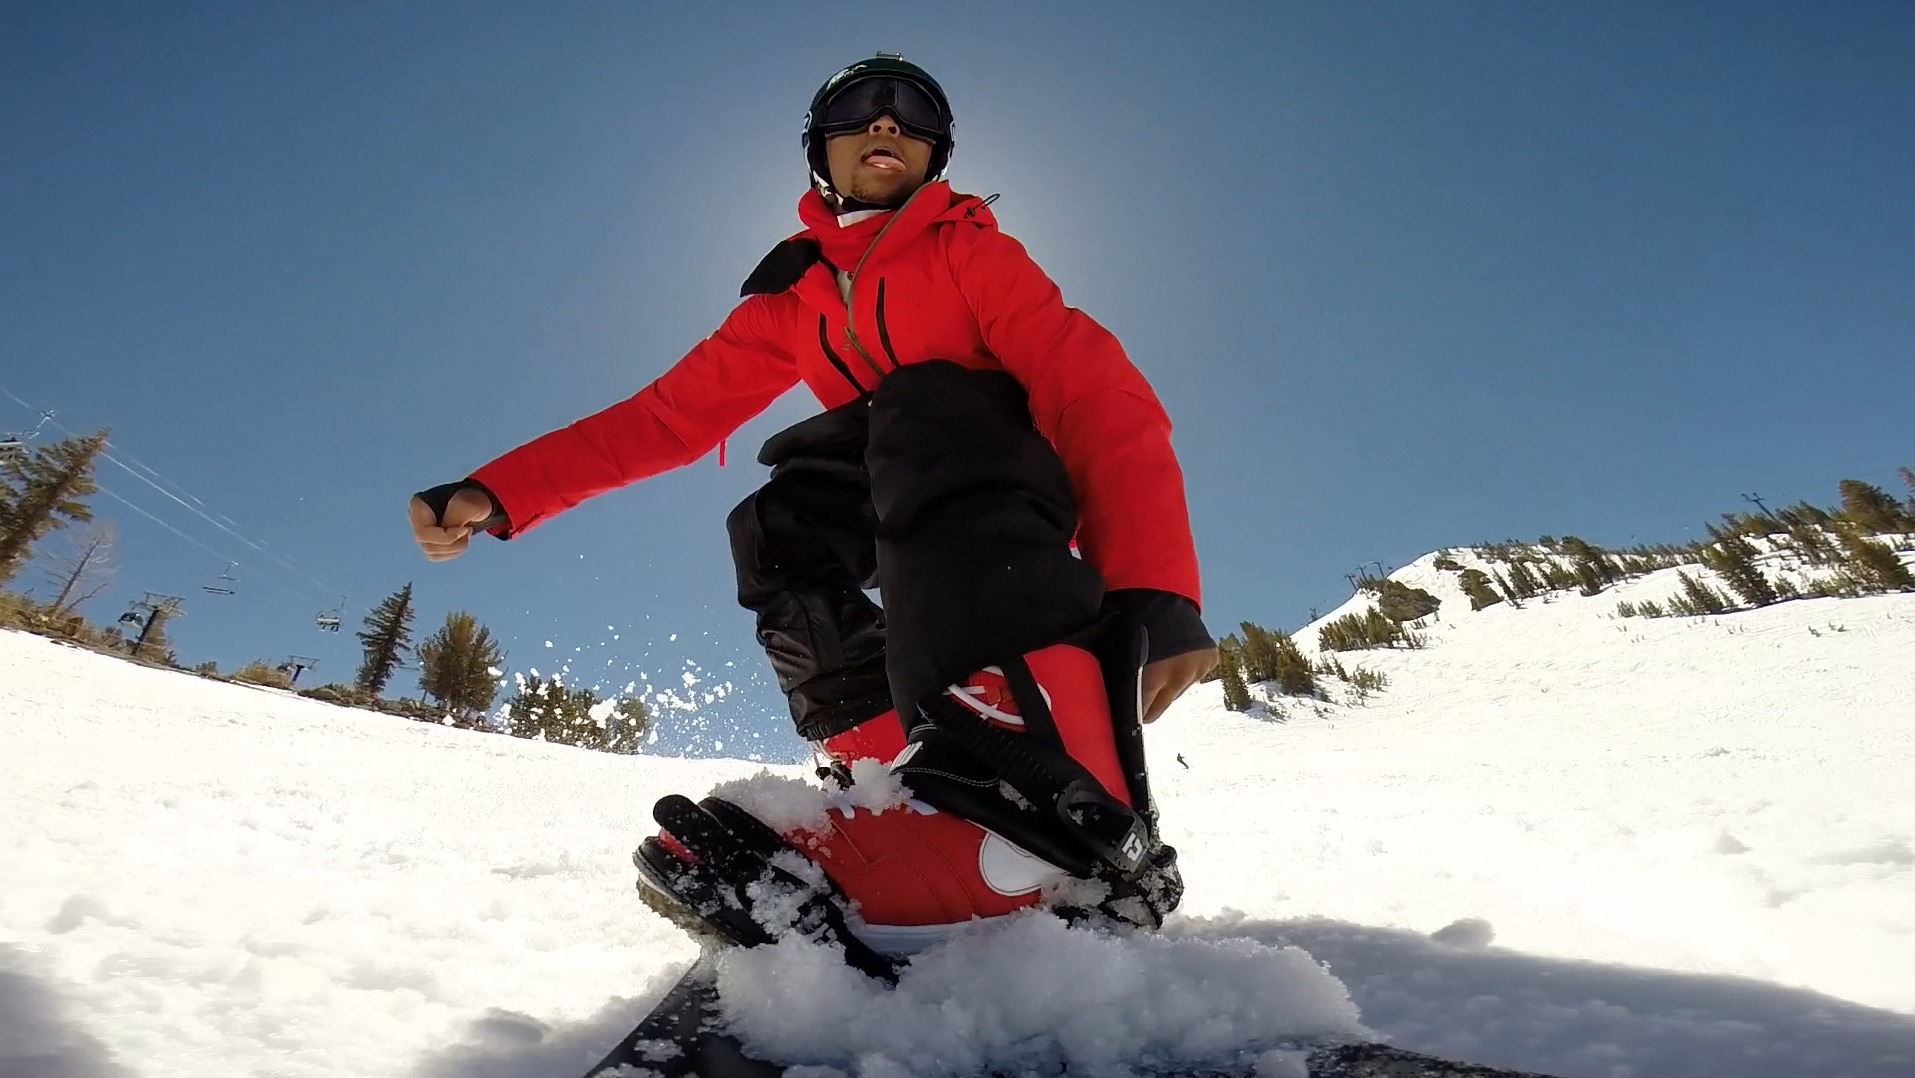 Kevin L. Walker snowboarding down Maoth mountain's advanced black diamond slopes (2014)